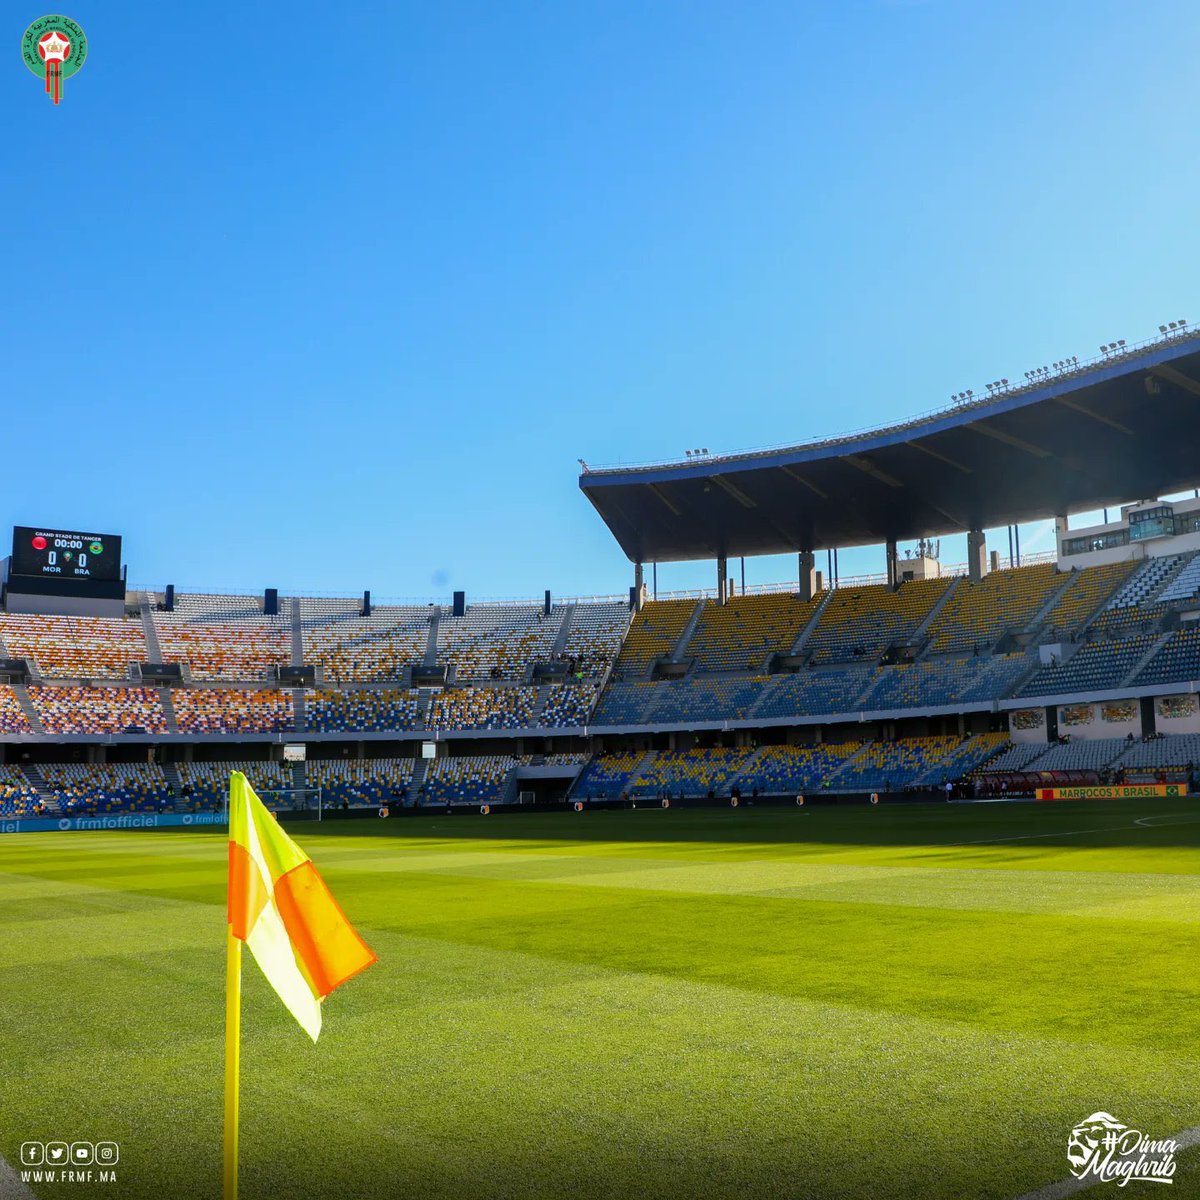 Le joyau qui accueille le match amical 🇲🇦⚡🇧🇷

CreditPhoto : DR #DimaMaghrib #AtlasLions #TeamMorocco #DestinationMorocco2025